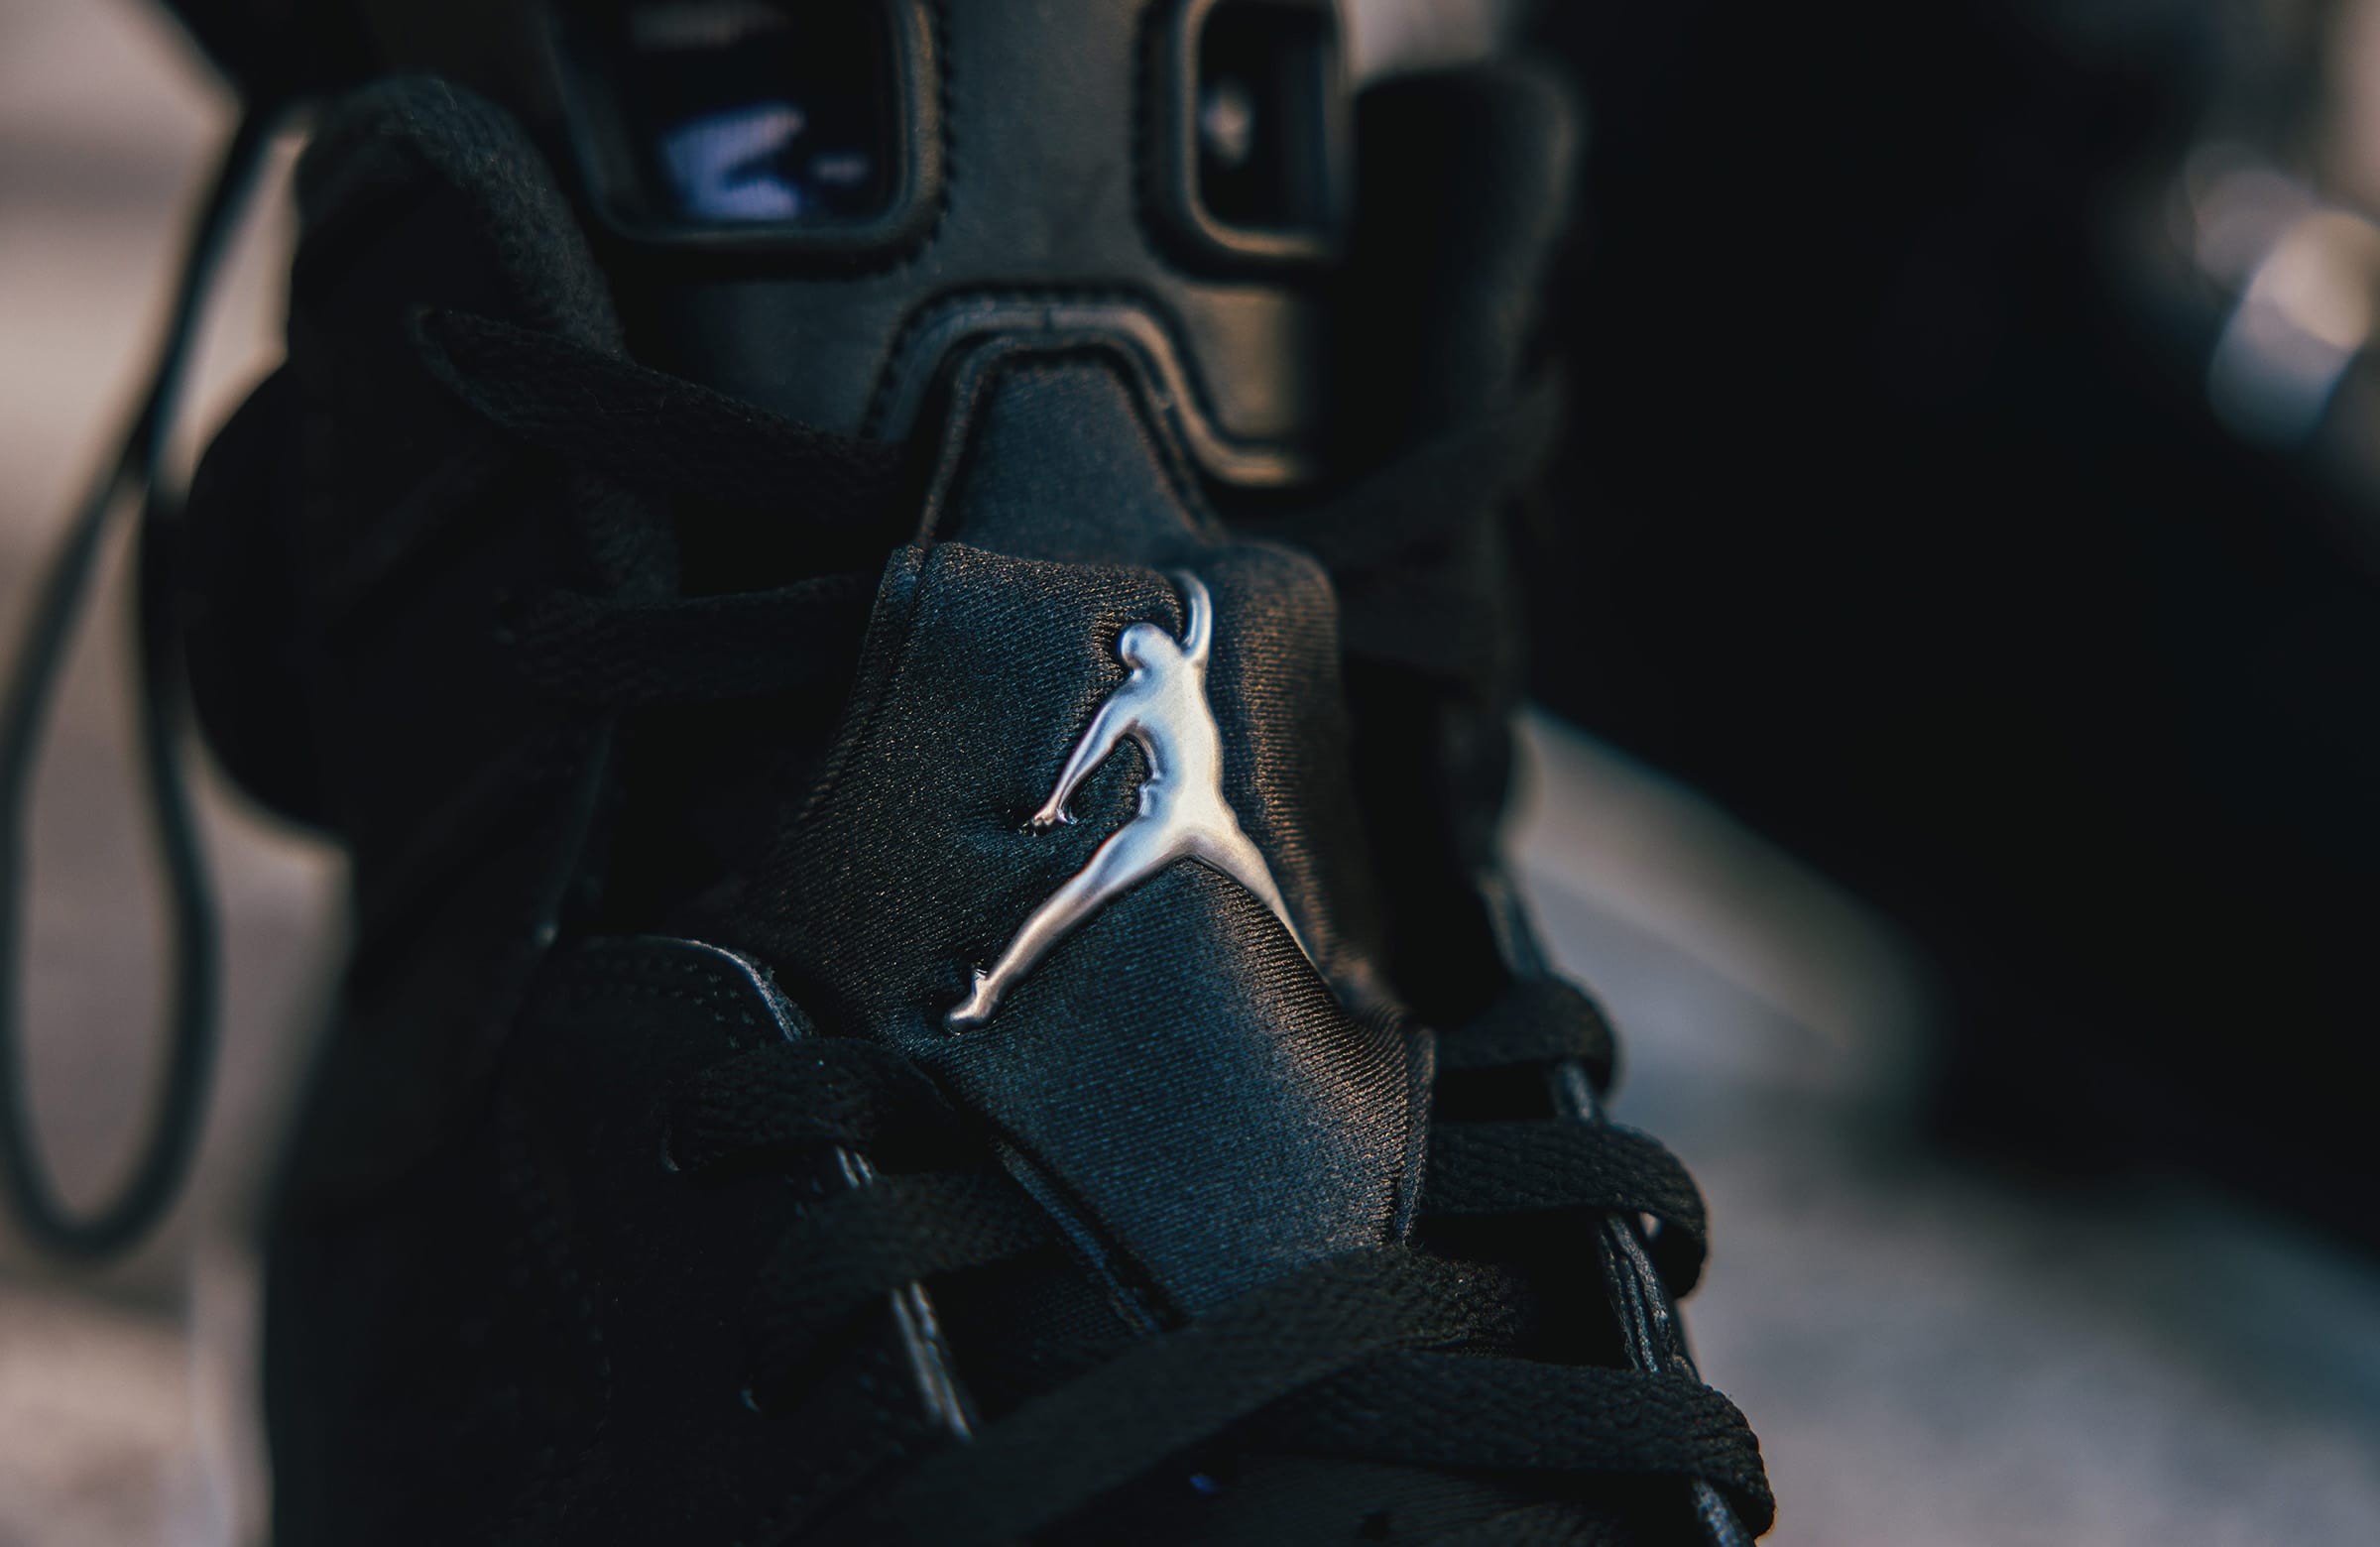 The Air Jordan 6 Gets “Chrome” Plating – DTLR